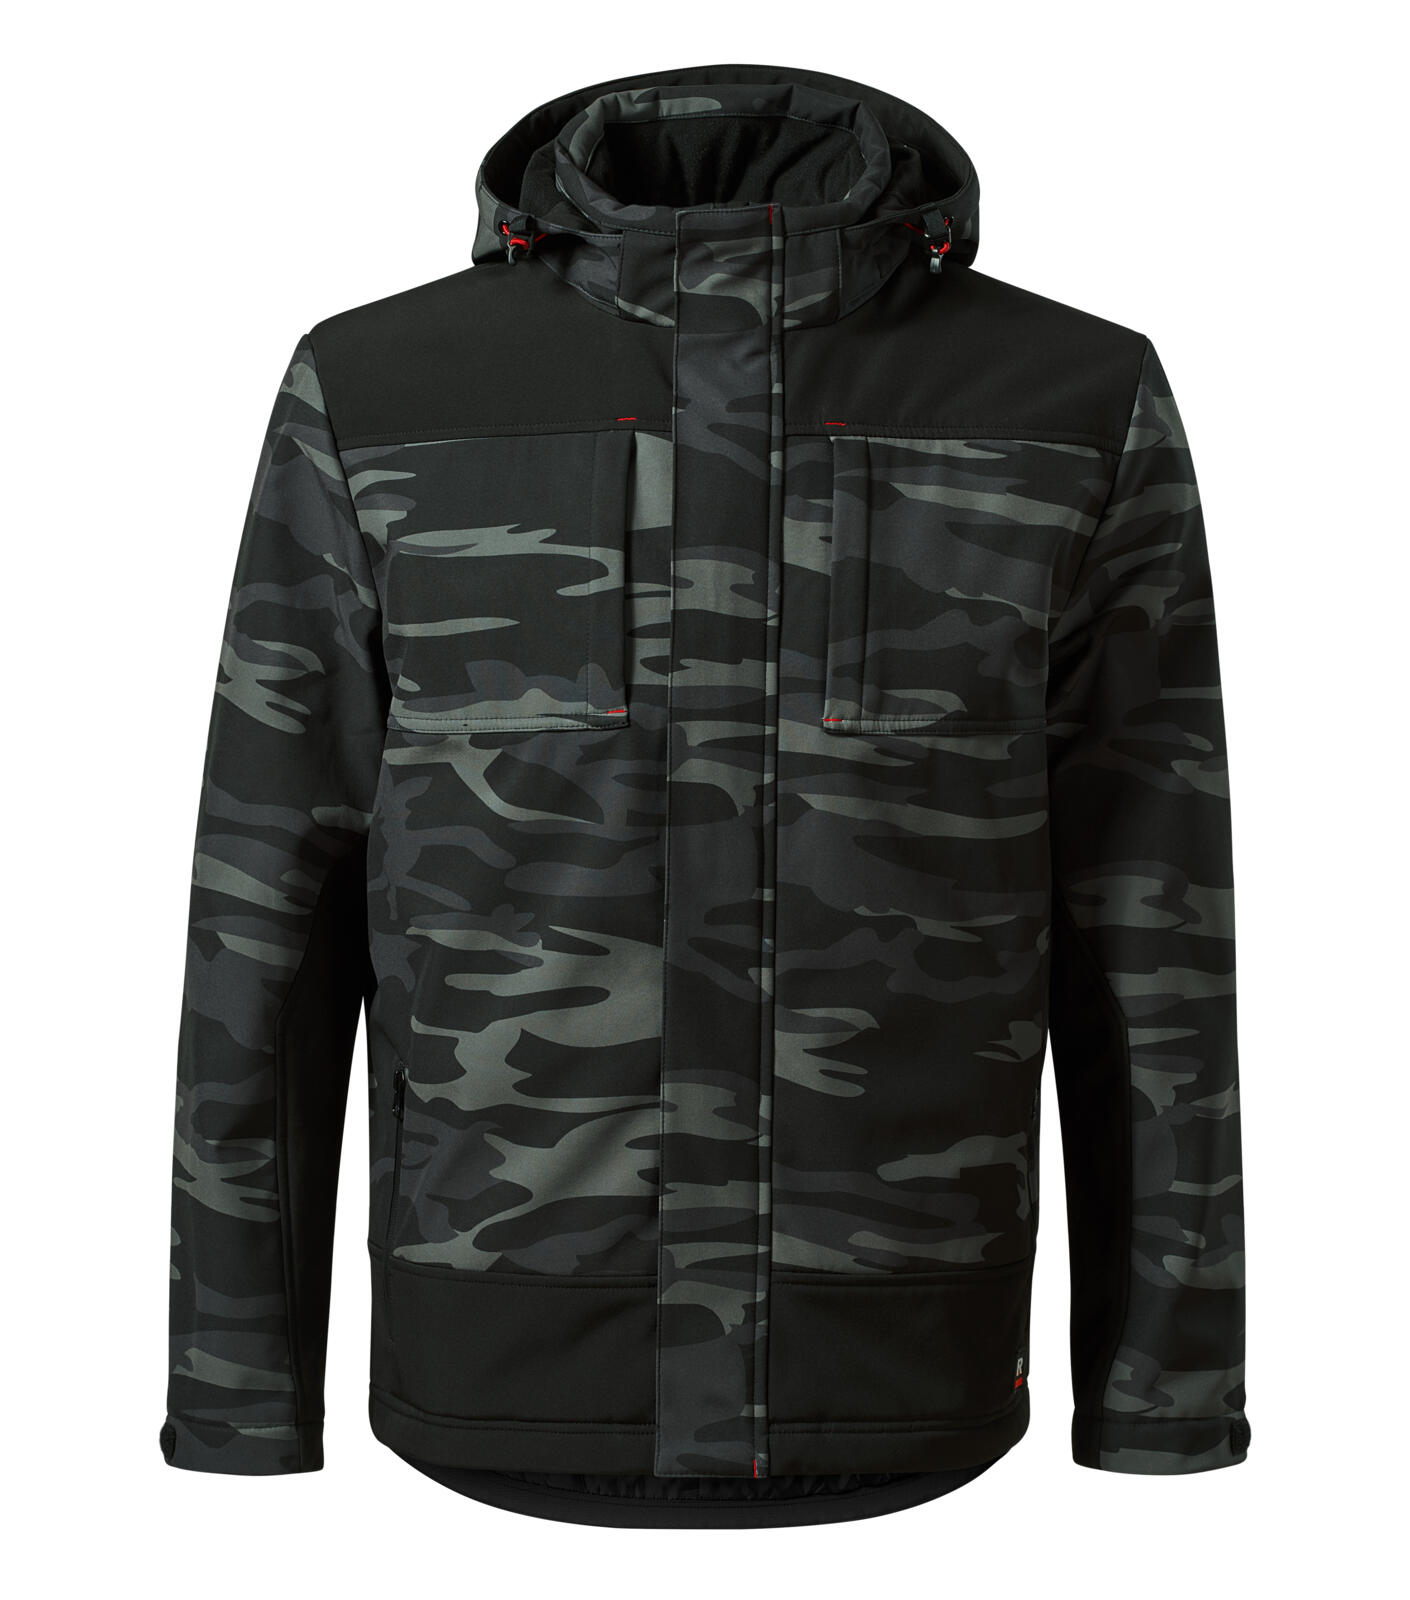 Vertex Camo Zimní softshellová bunda pánská Barva: camouflage dark gray, Velikost: S